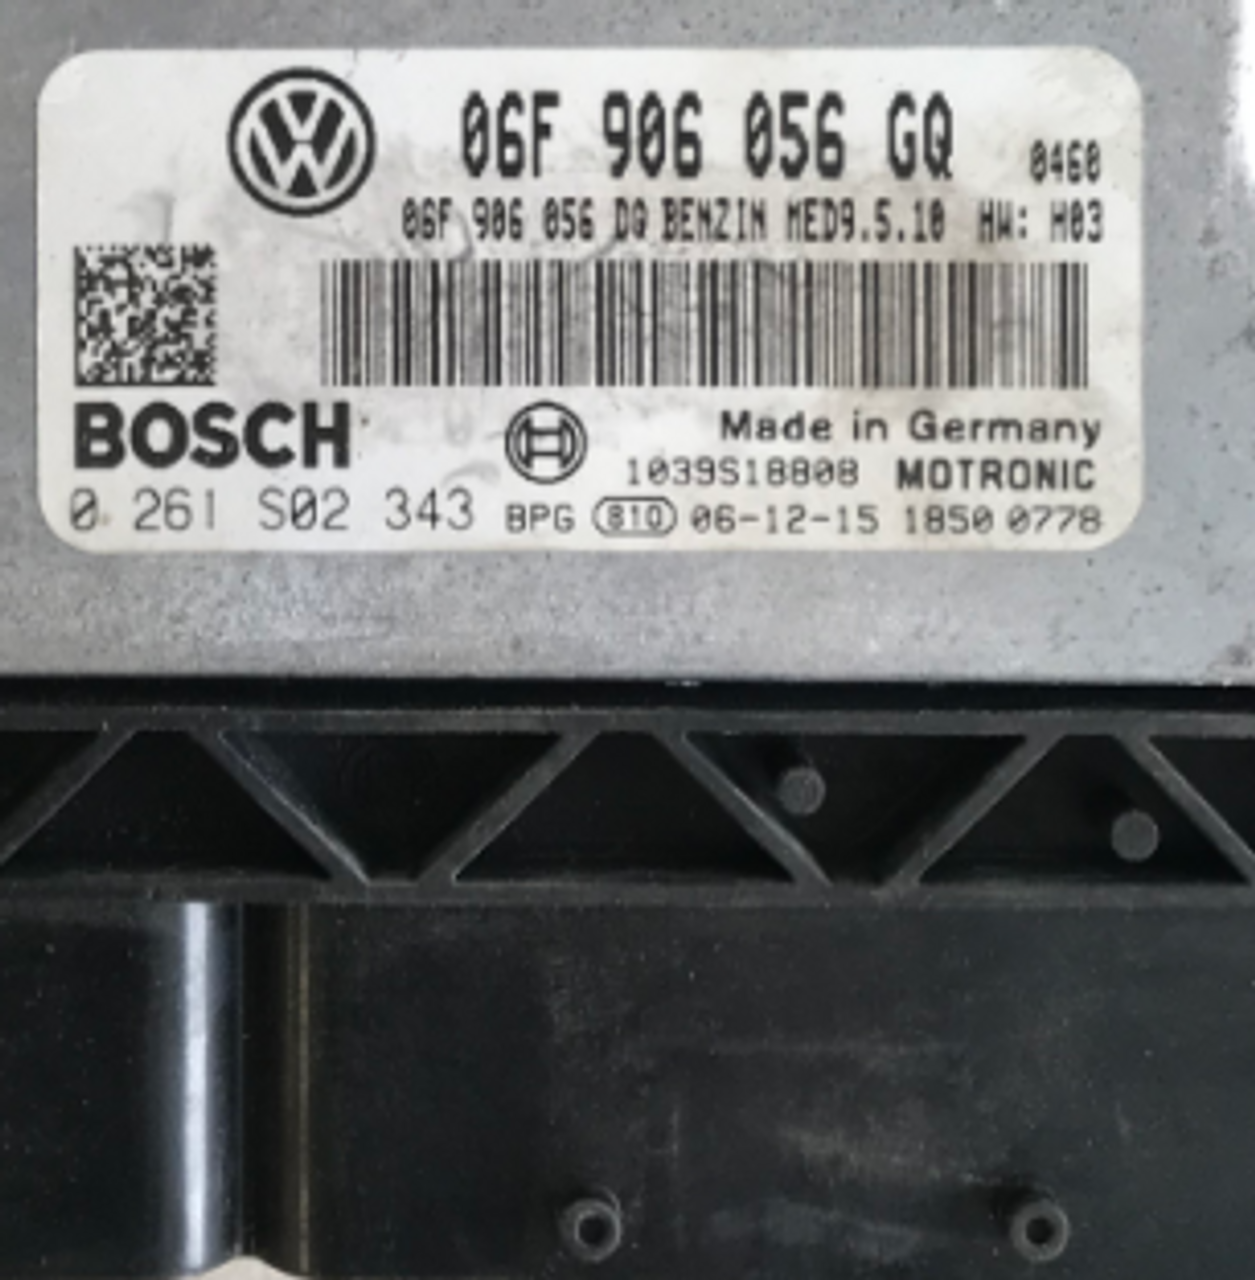 VW Passat 2.0 FSI, 0261S02343, 0 261 S02 343, 06F906056GQ, 06F 906 056 GQ, MED9.5.10